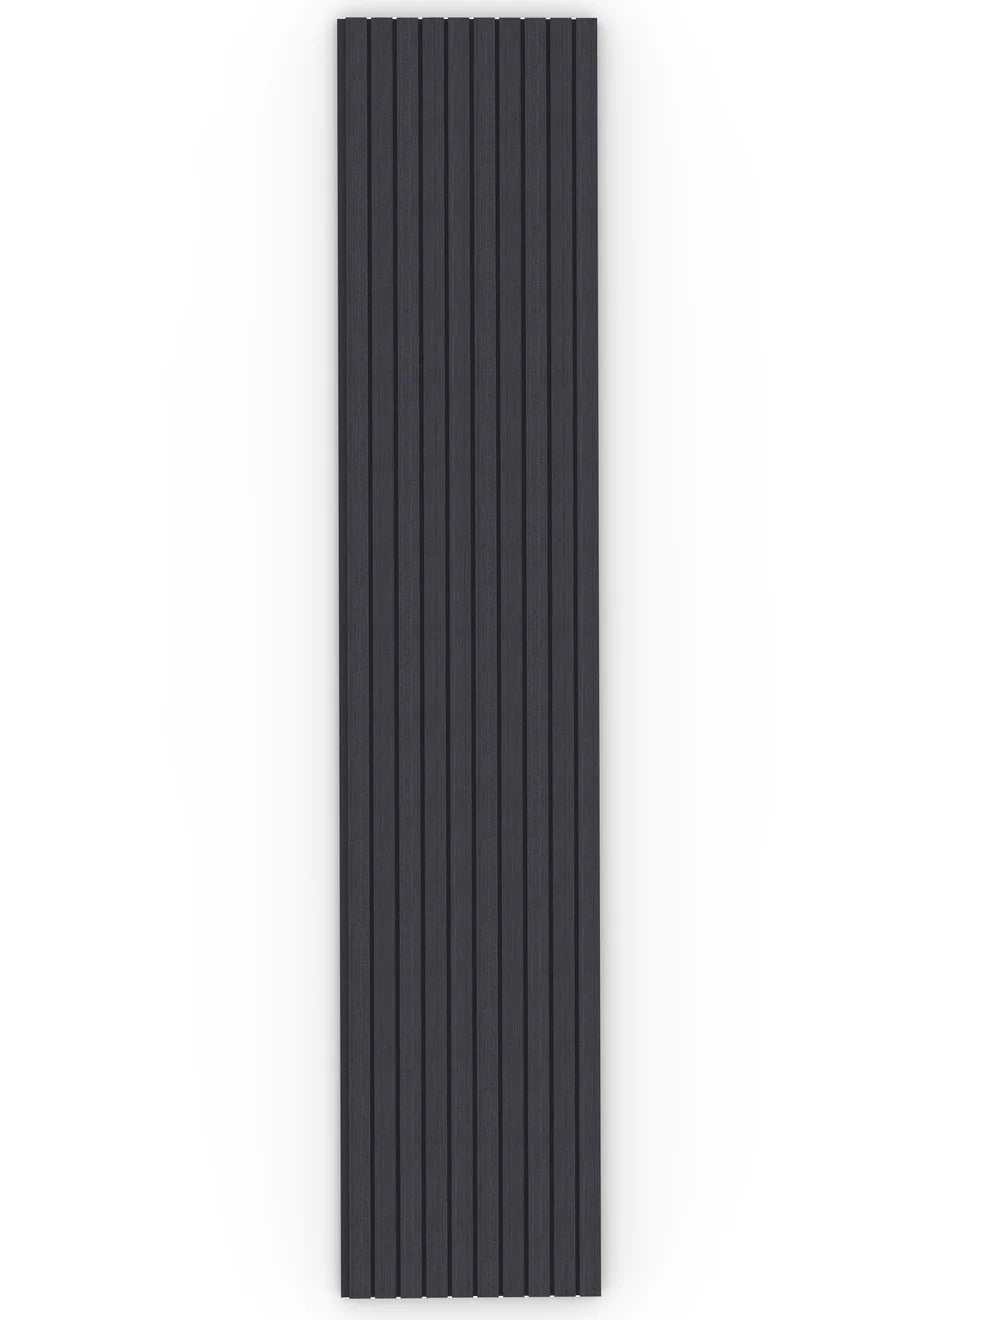 Black Acoustic Wood Wall Panels | Series 2 - 240x60cm